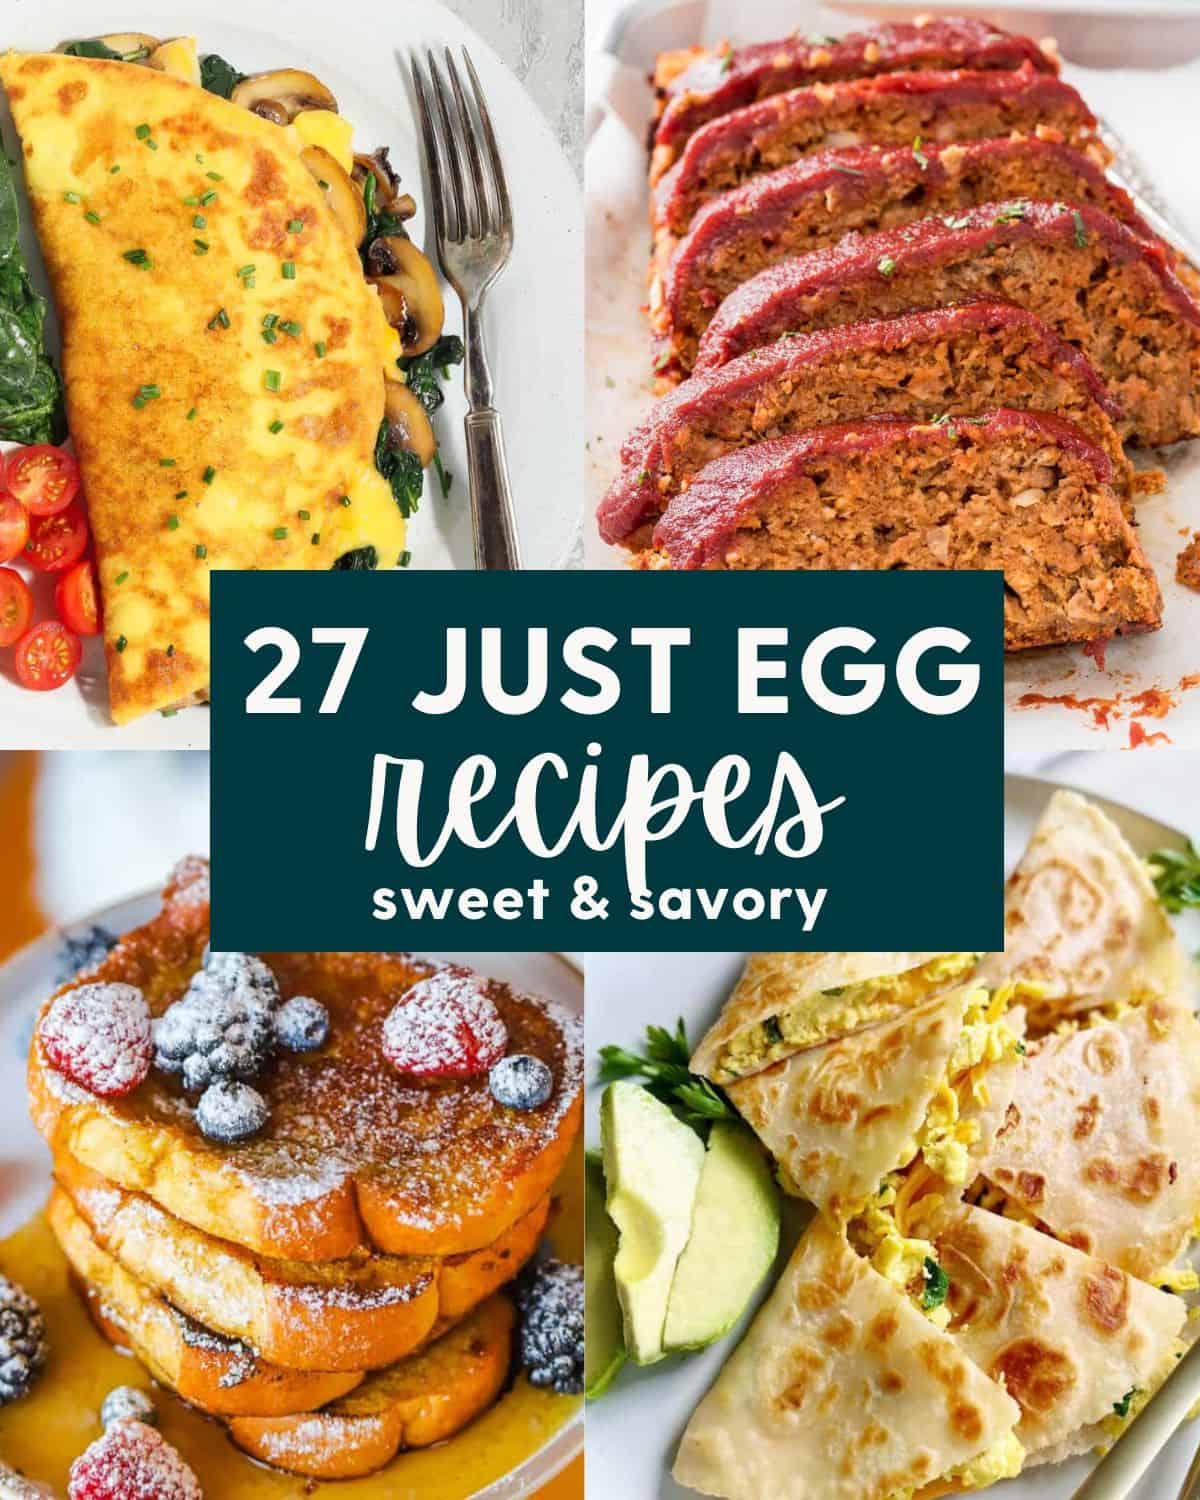 https://homecookedroots.com/wp-content/uploads/2022/11/27-Just-Egg-recipes.jpg